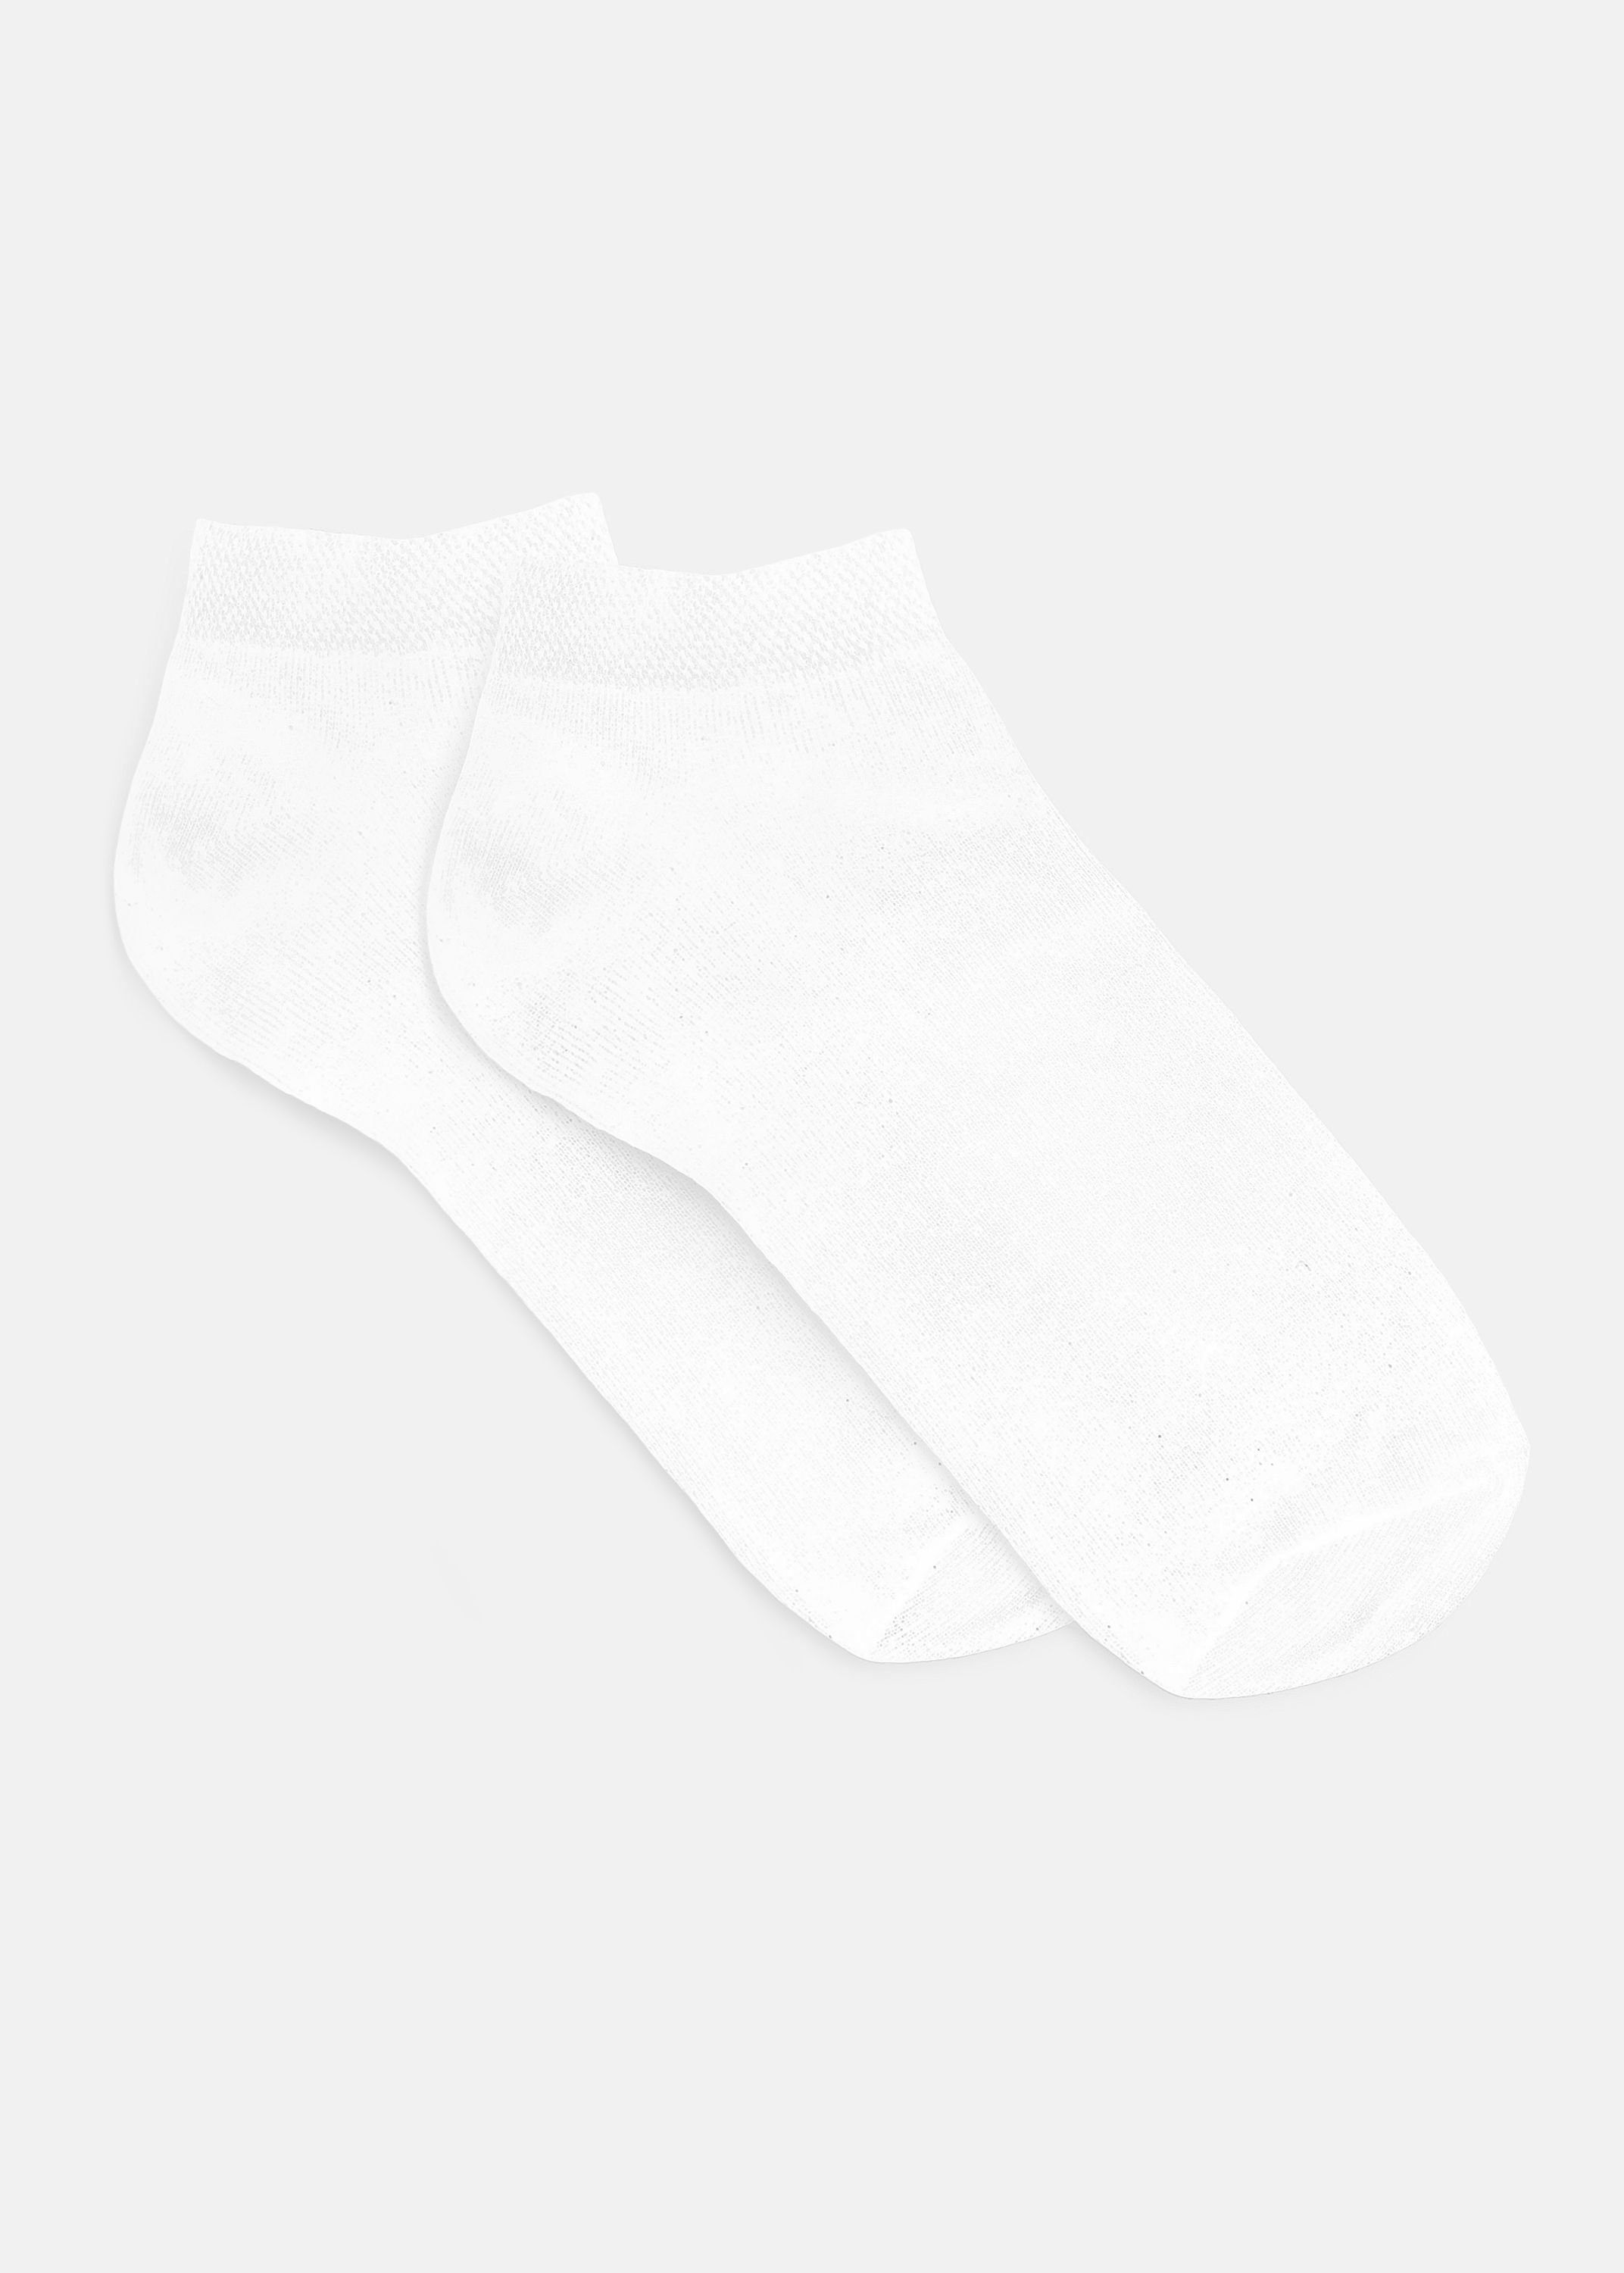 Sneaker Herren 10er 5er und Weiß Ladeheid AT004 Socken Damen Pack Socken Pack) (5